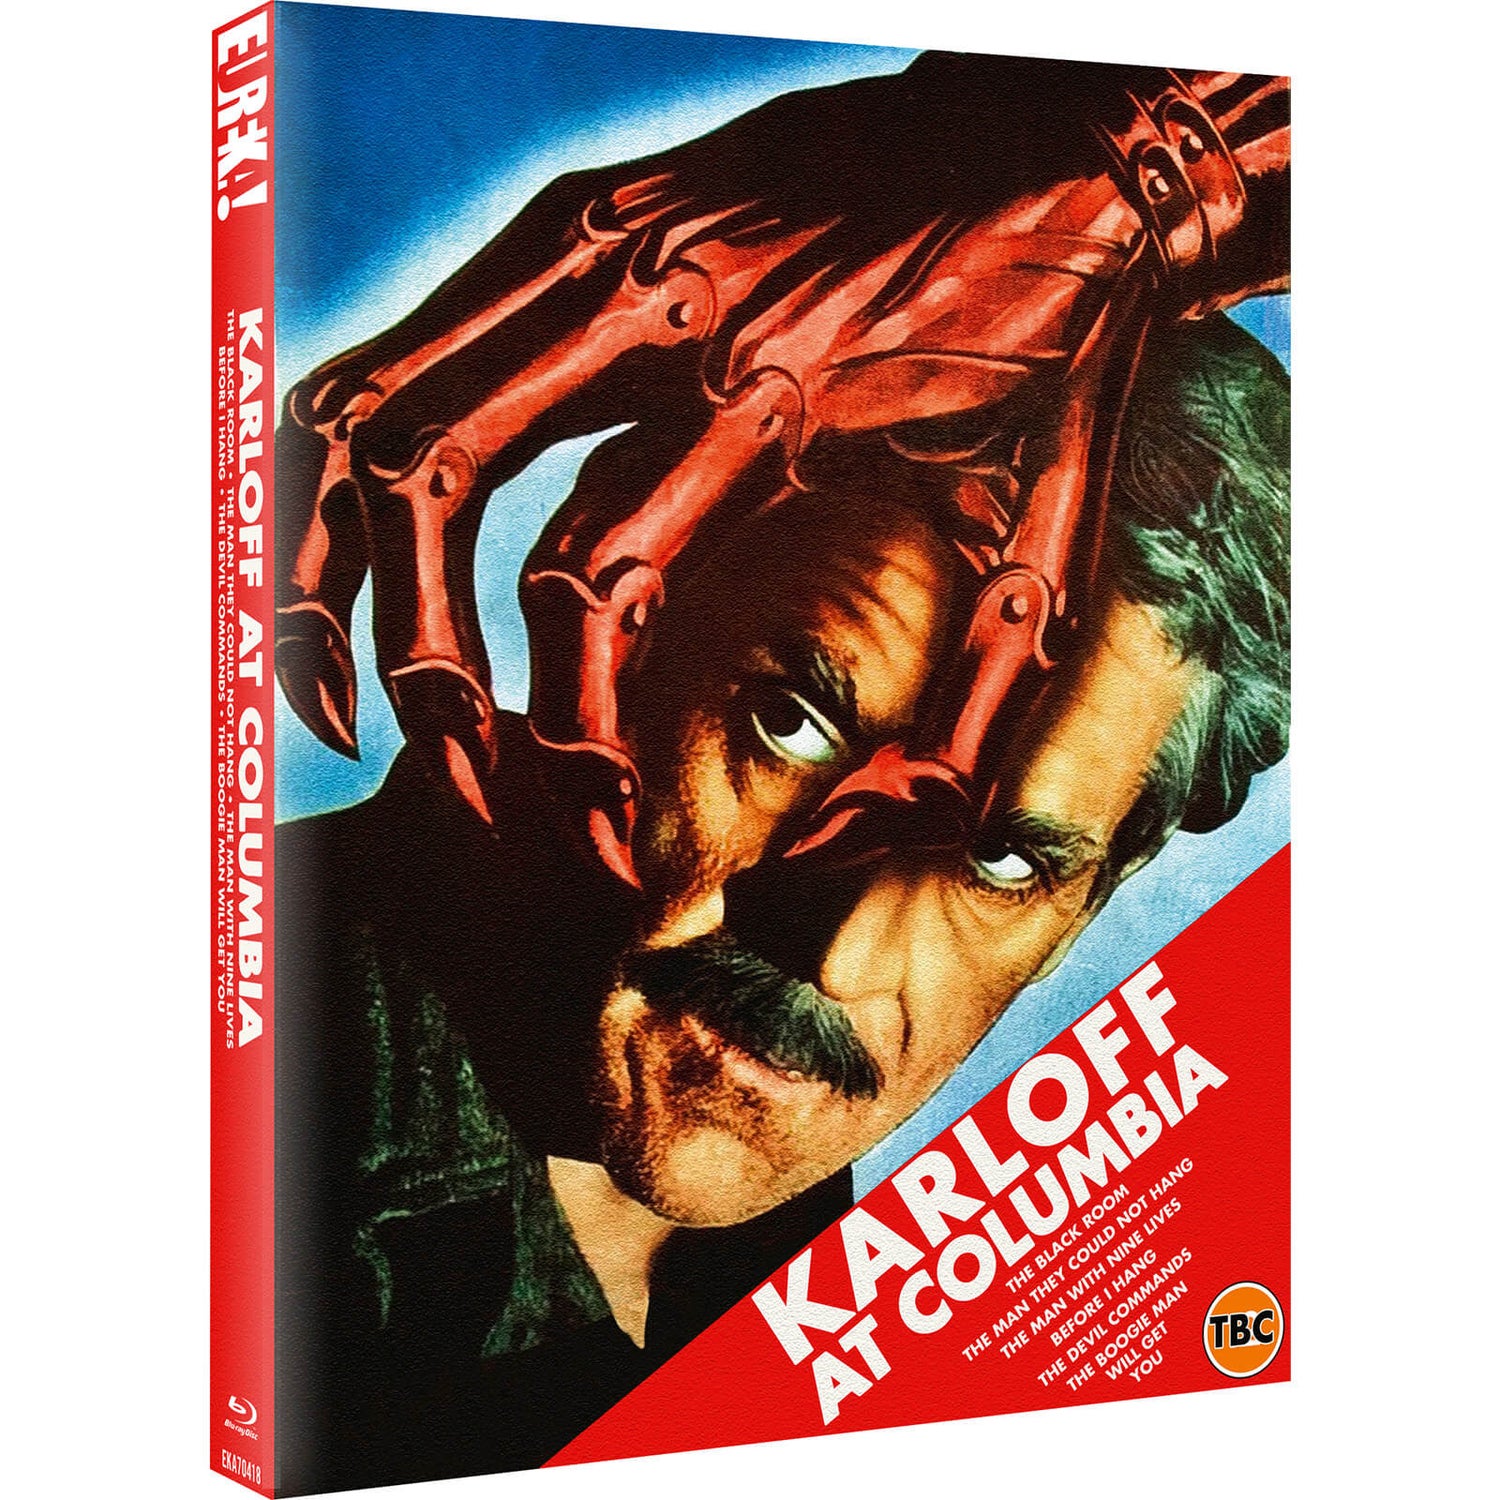 Karloff op Columbia (Eureka Classics) Limited Edition